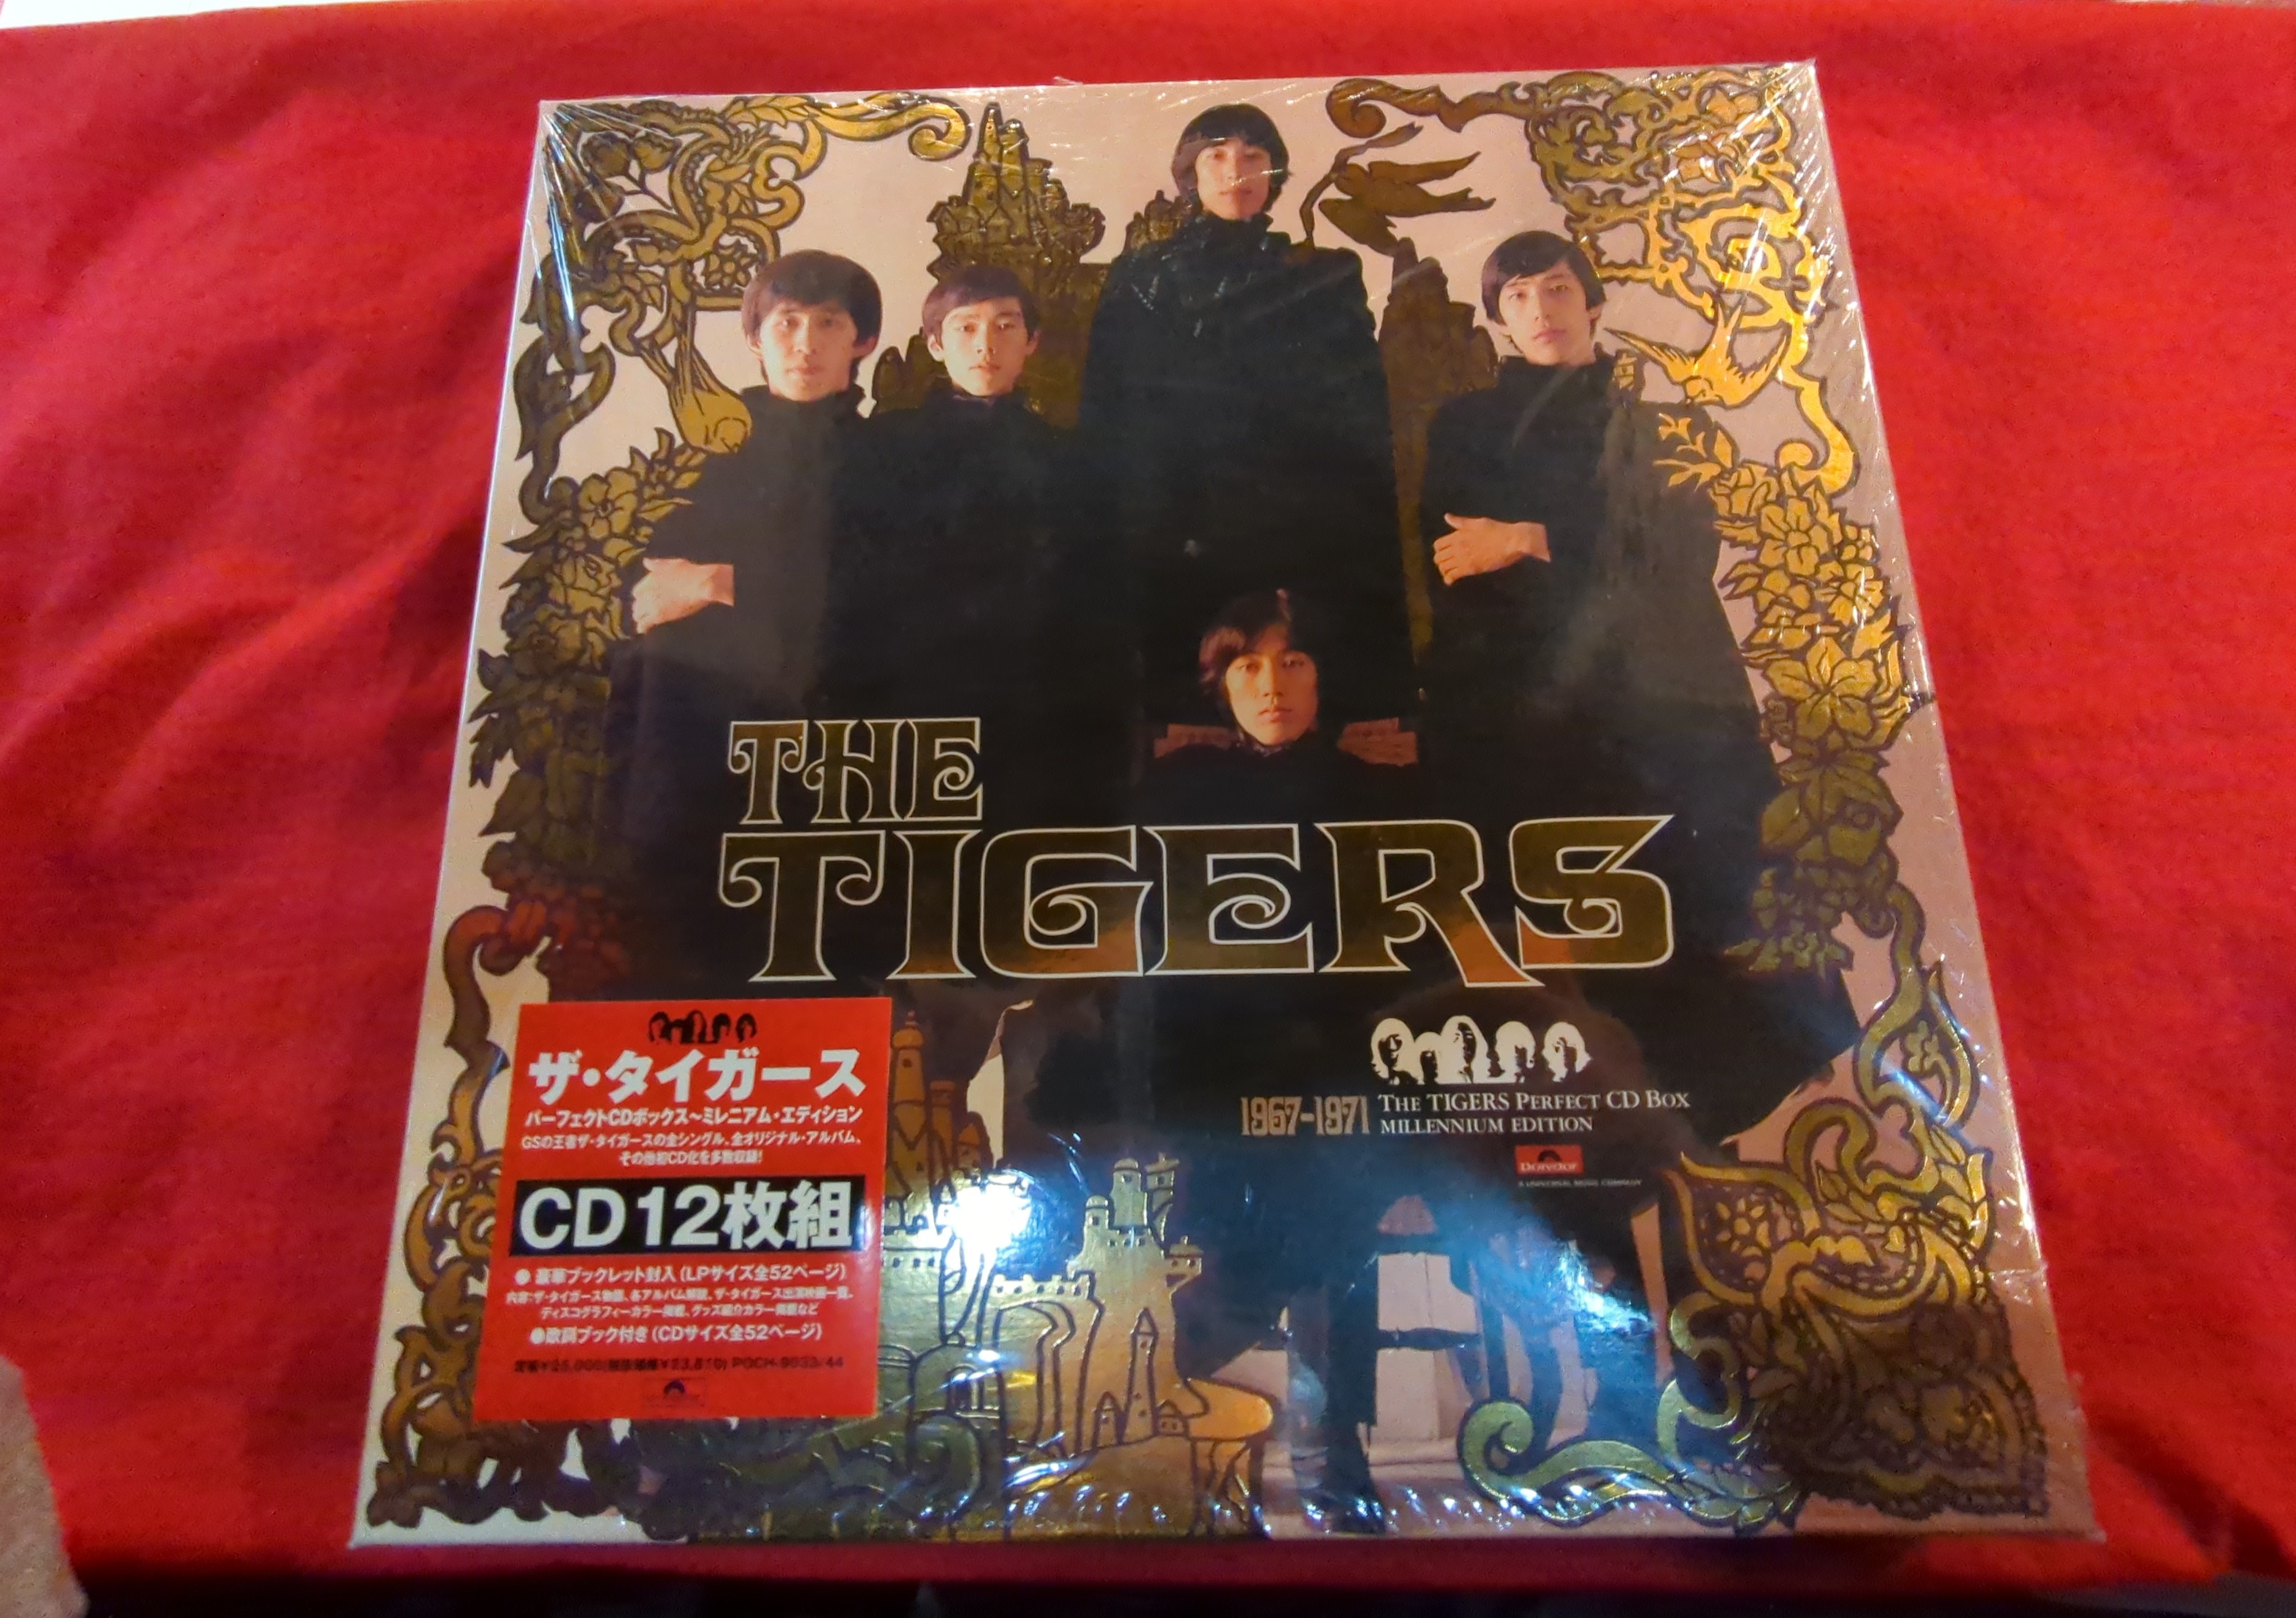 CD-BOX The Tigers Perfect CD BOX 1967-1971 ミレニアム